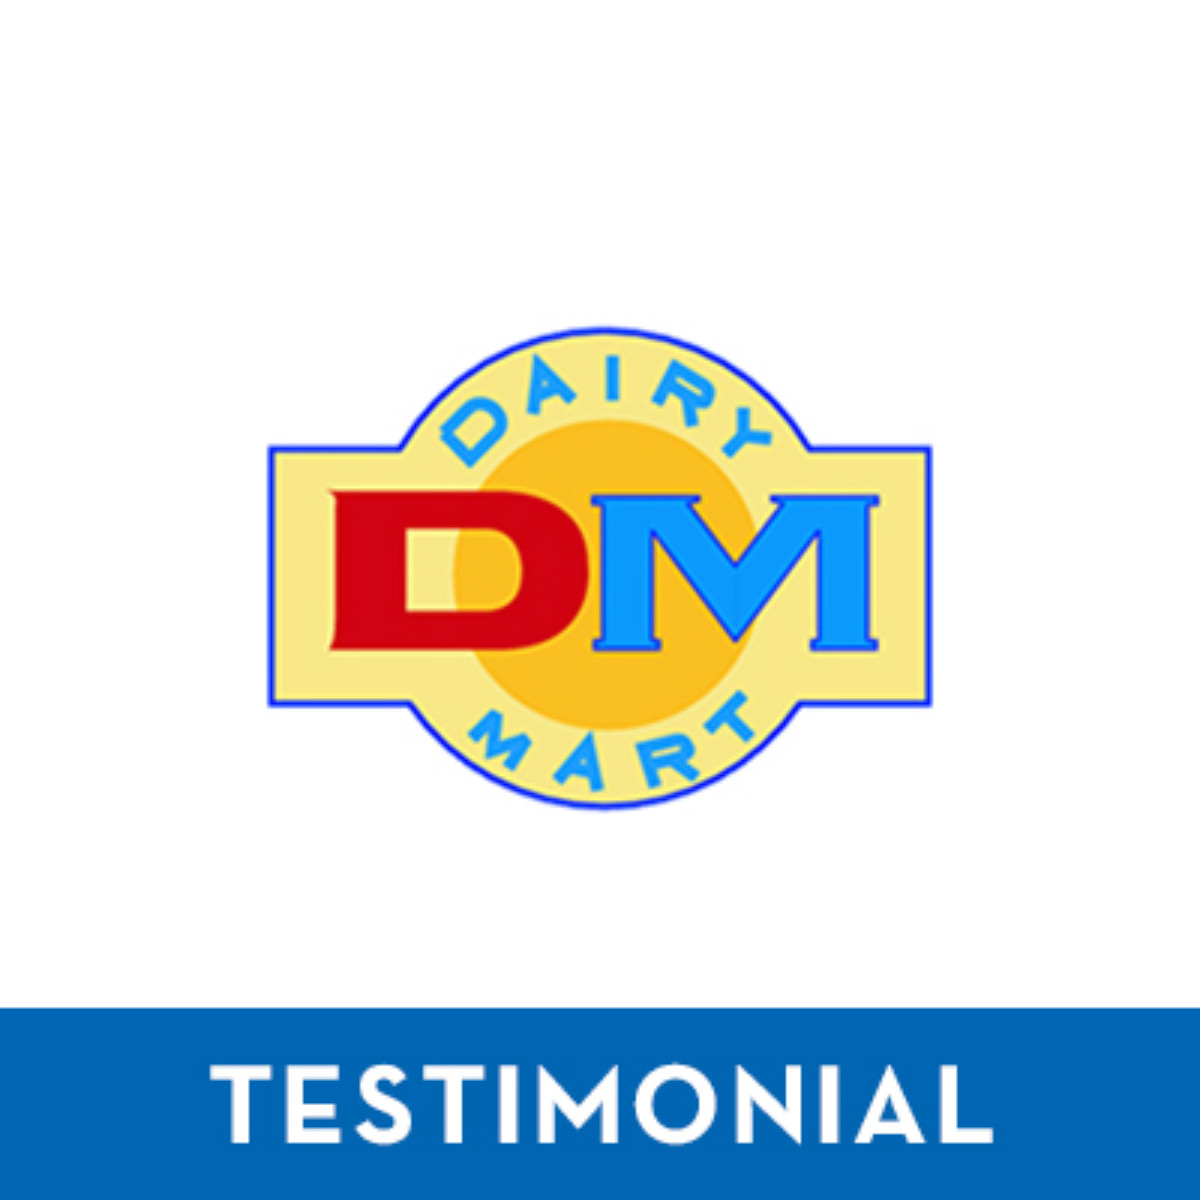 dairymart-testimonial-thumbnail-1200x1200